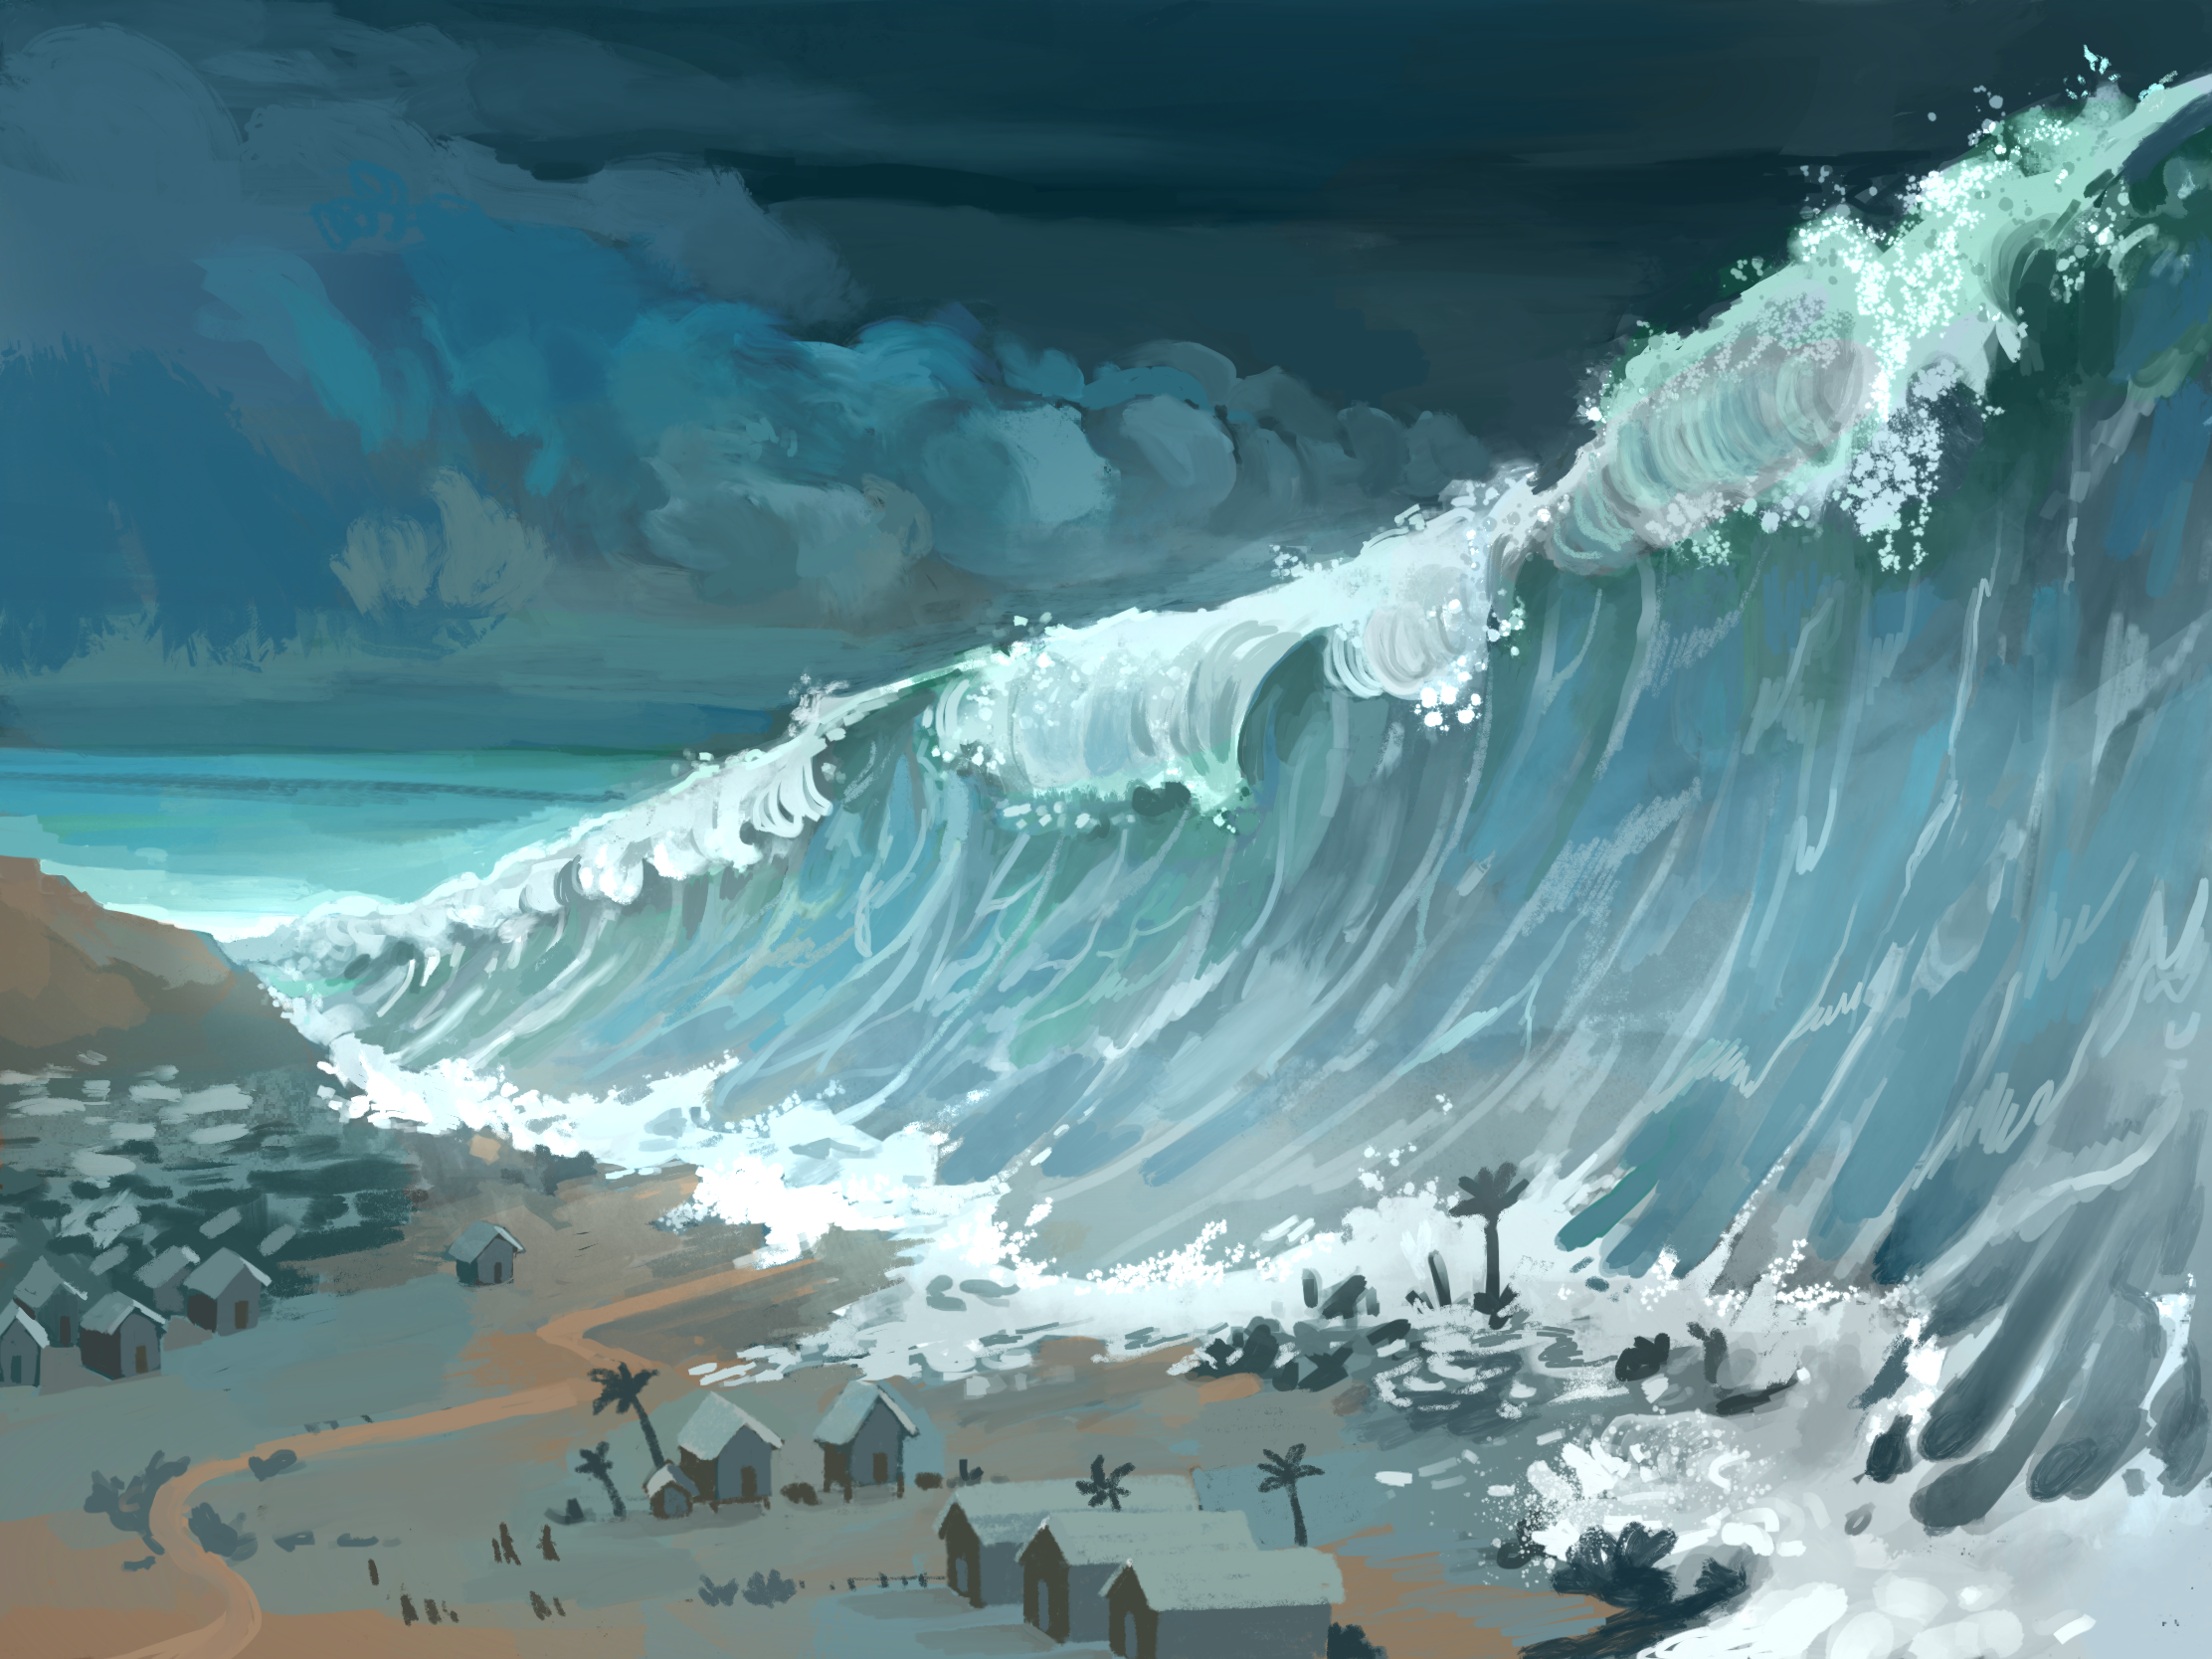 Tsunami artwork by Camille fourcade